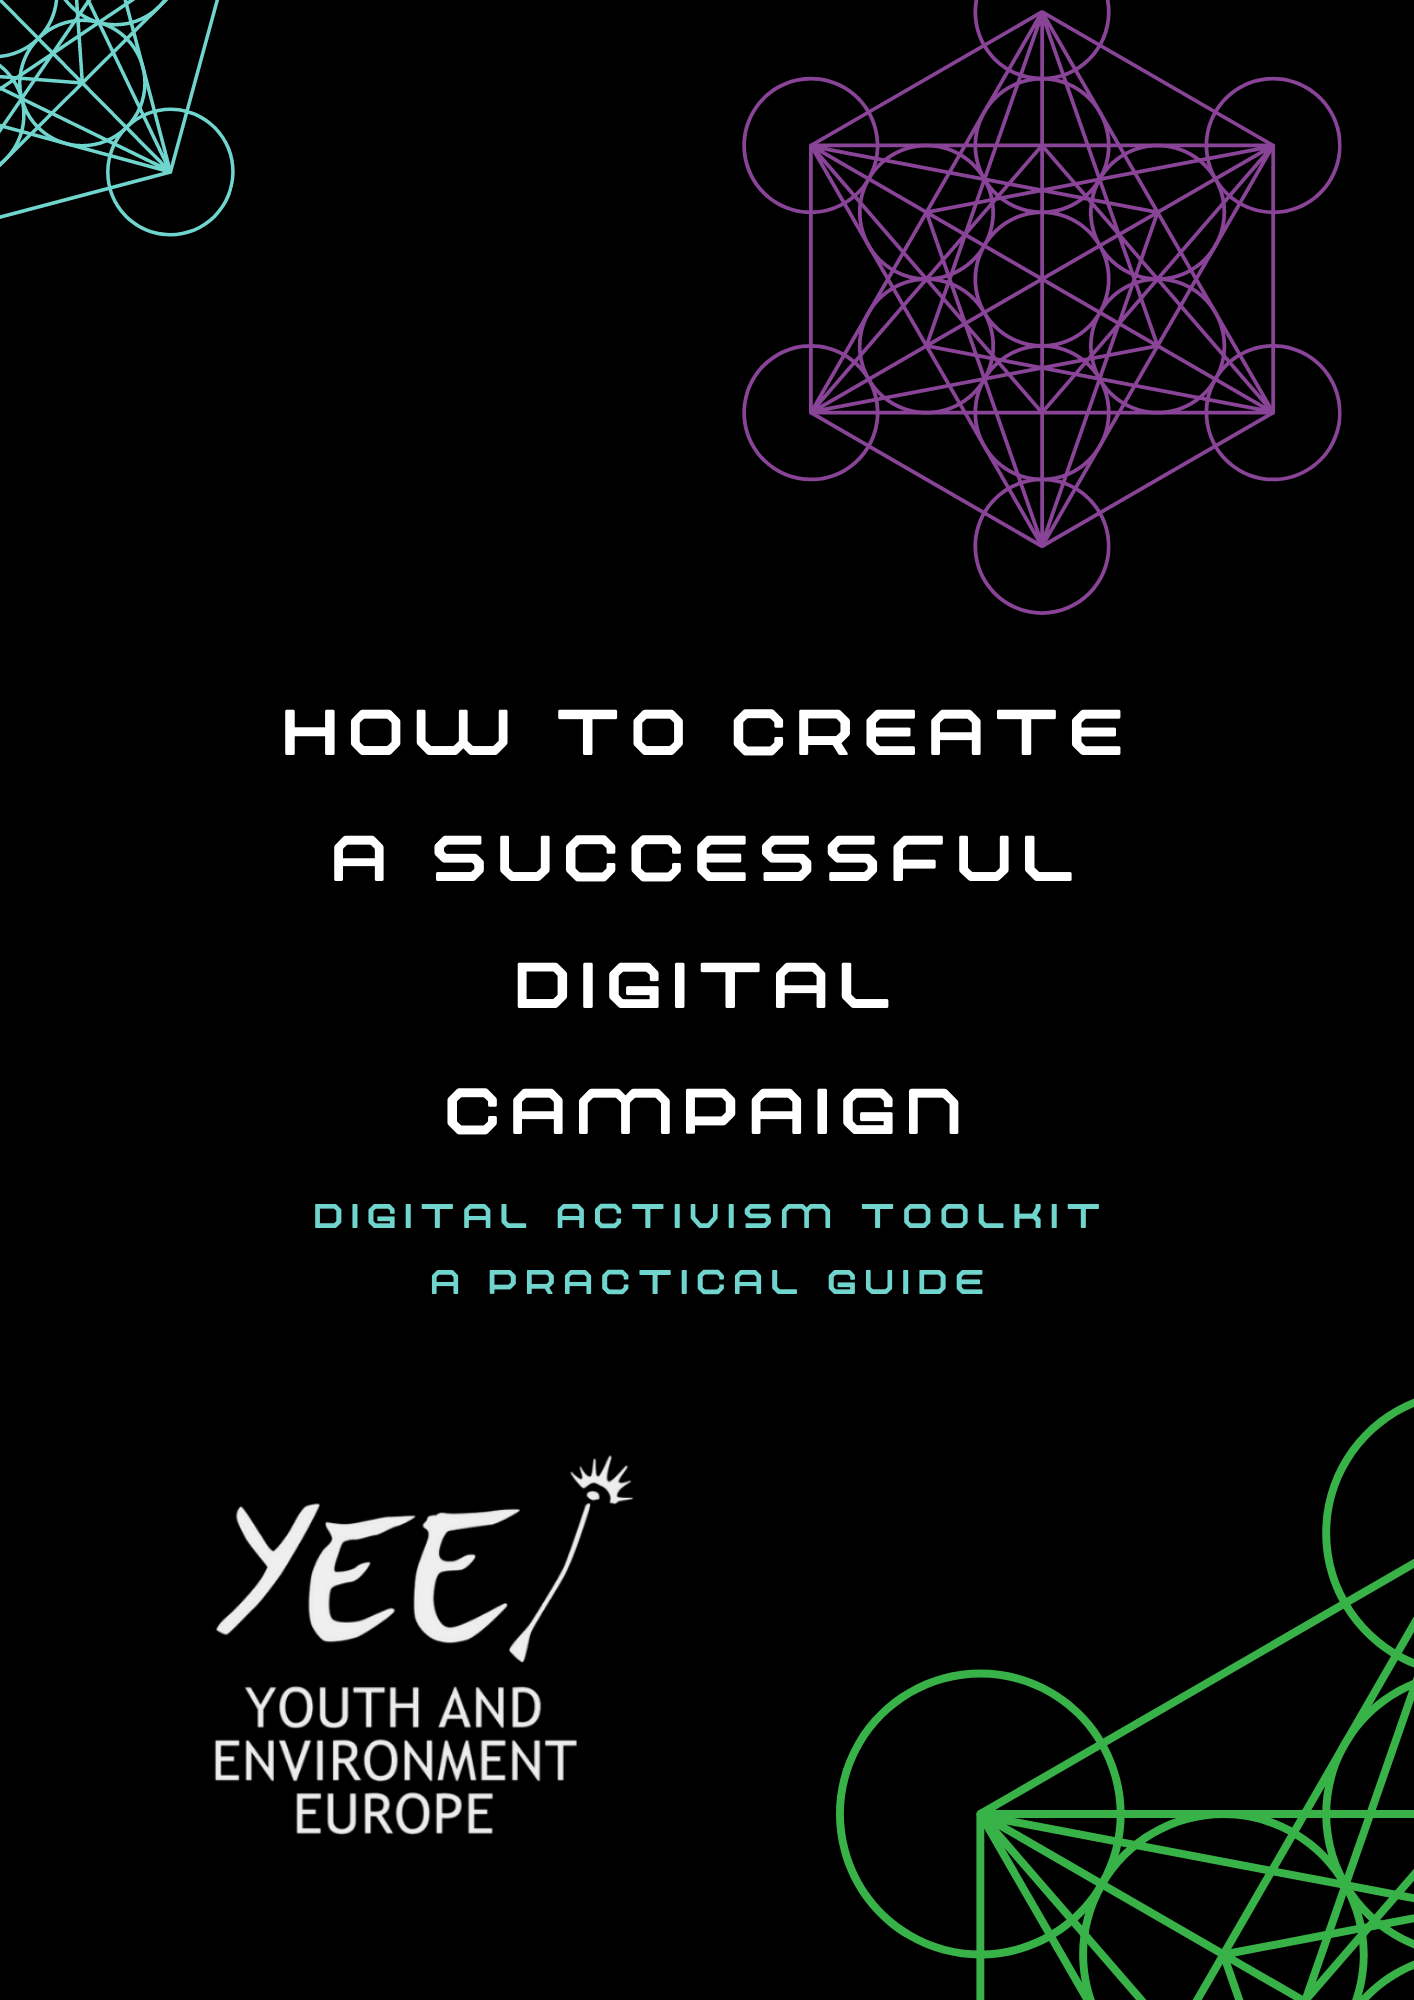 How to create a successful digital campaign